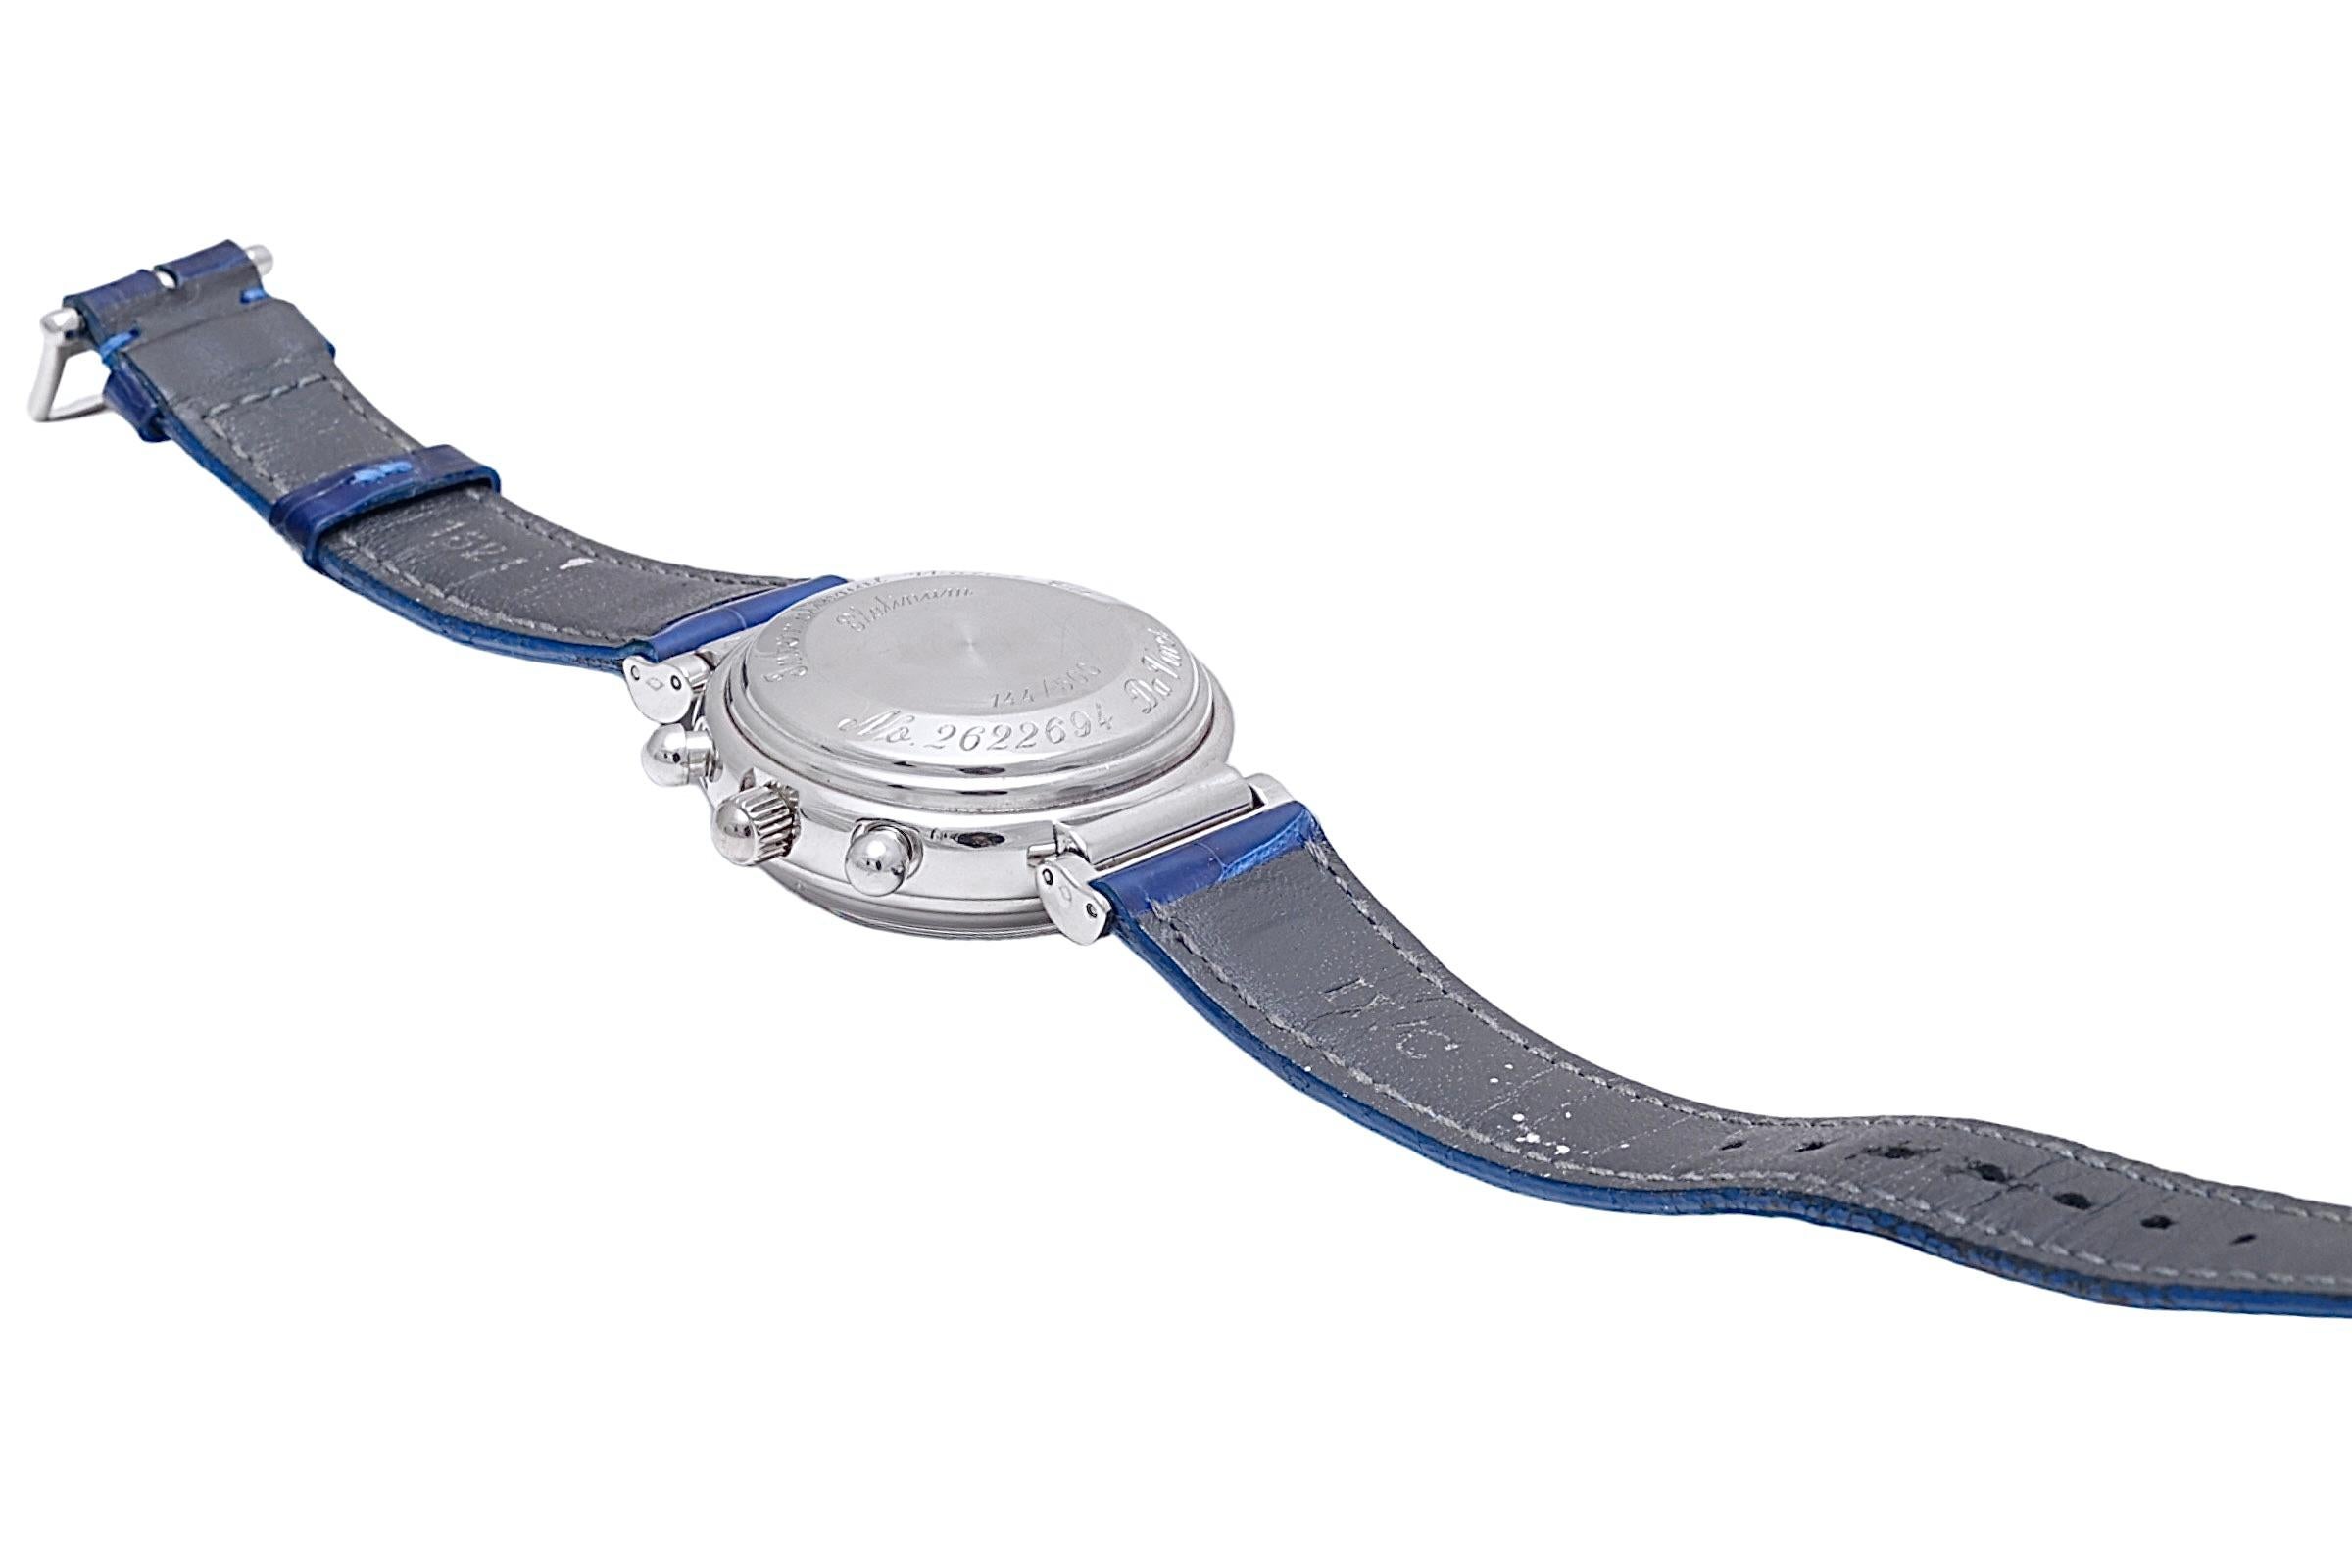 Platinum IWC Perpetual Calendar Split Second Chronograph Limited Wrist Watch3751 For Sale 8